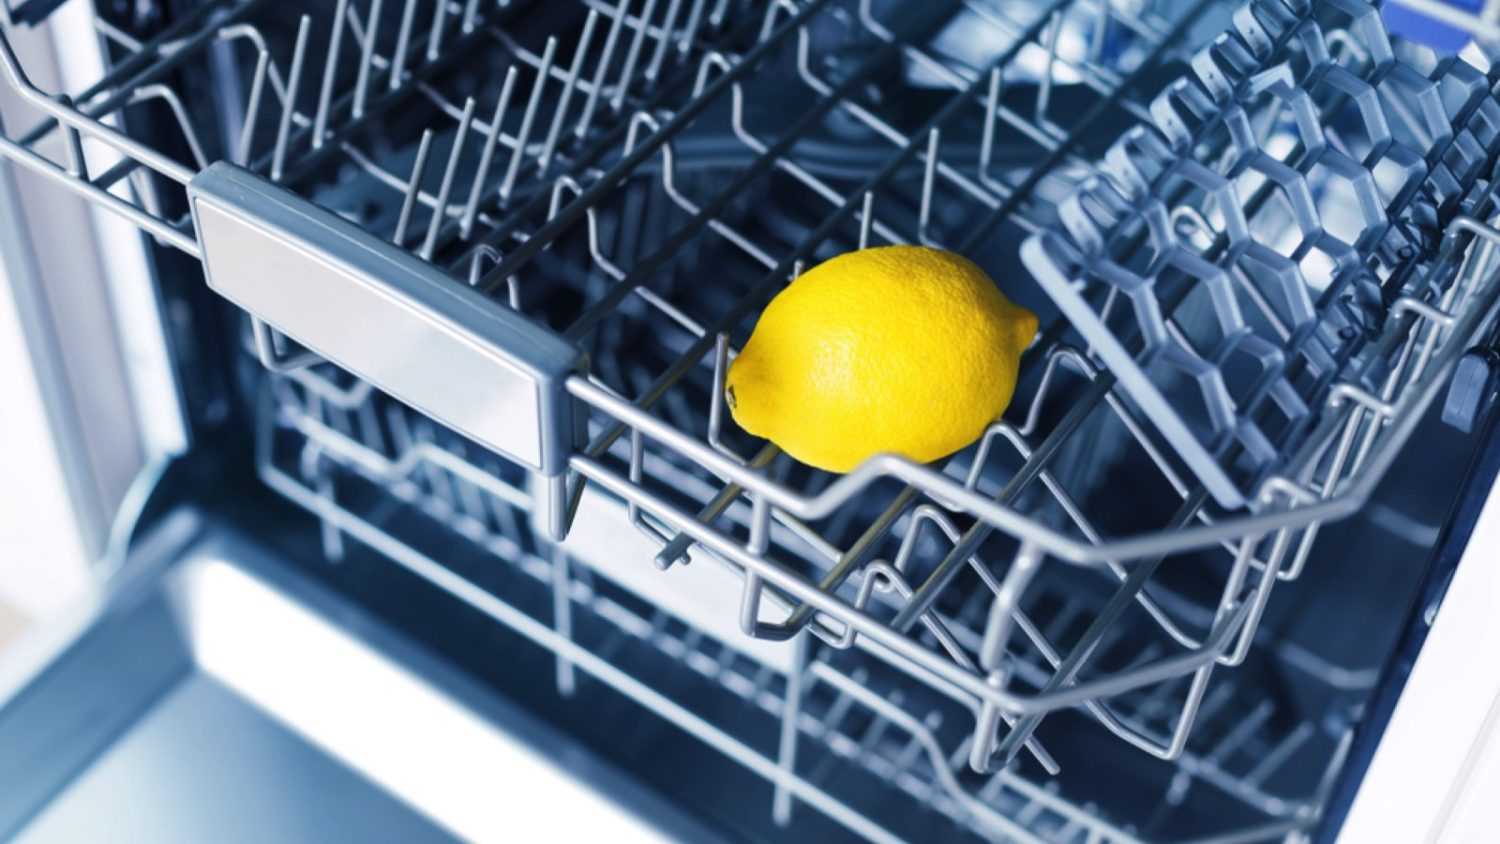 Lemon in dishwasher